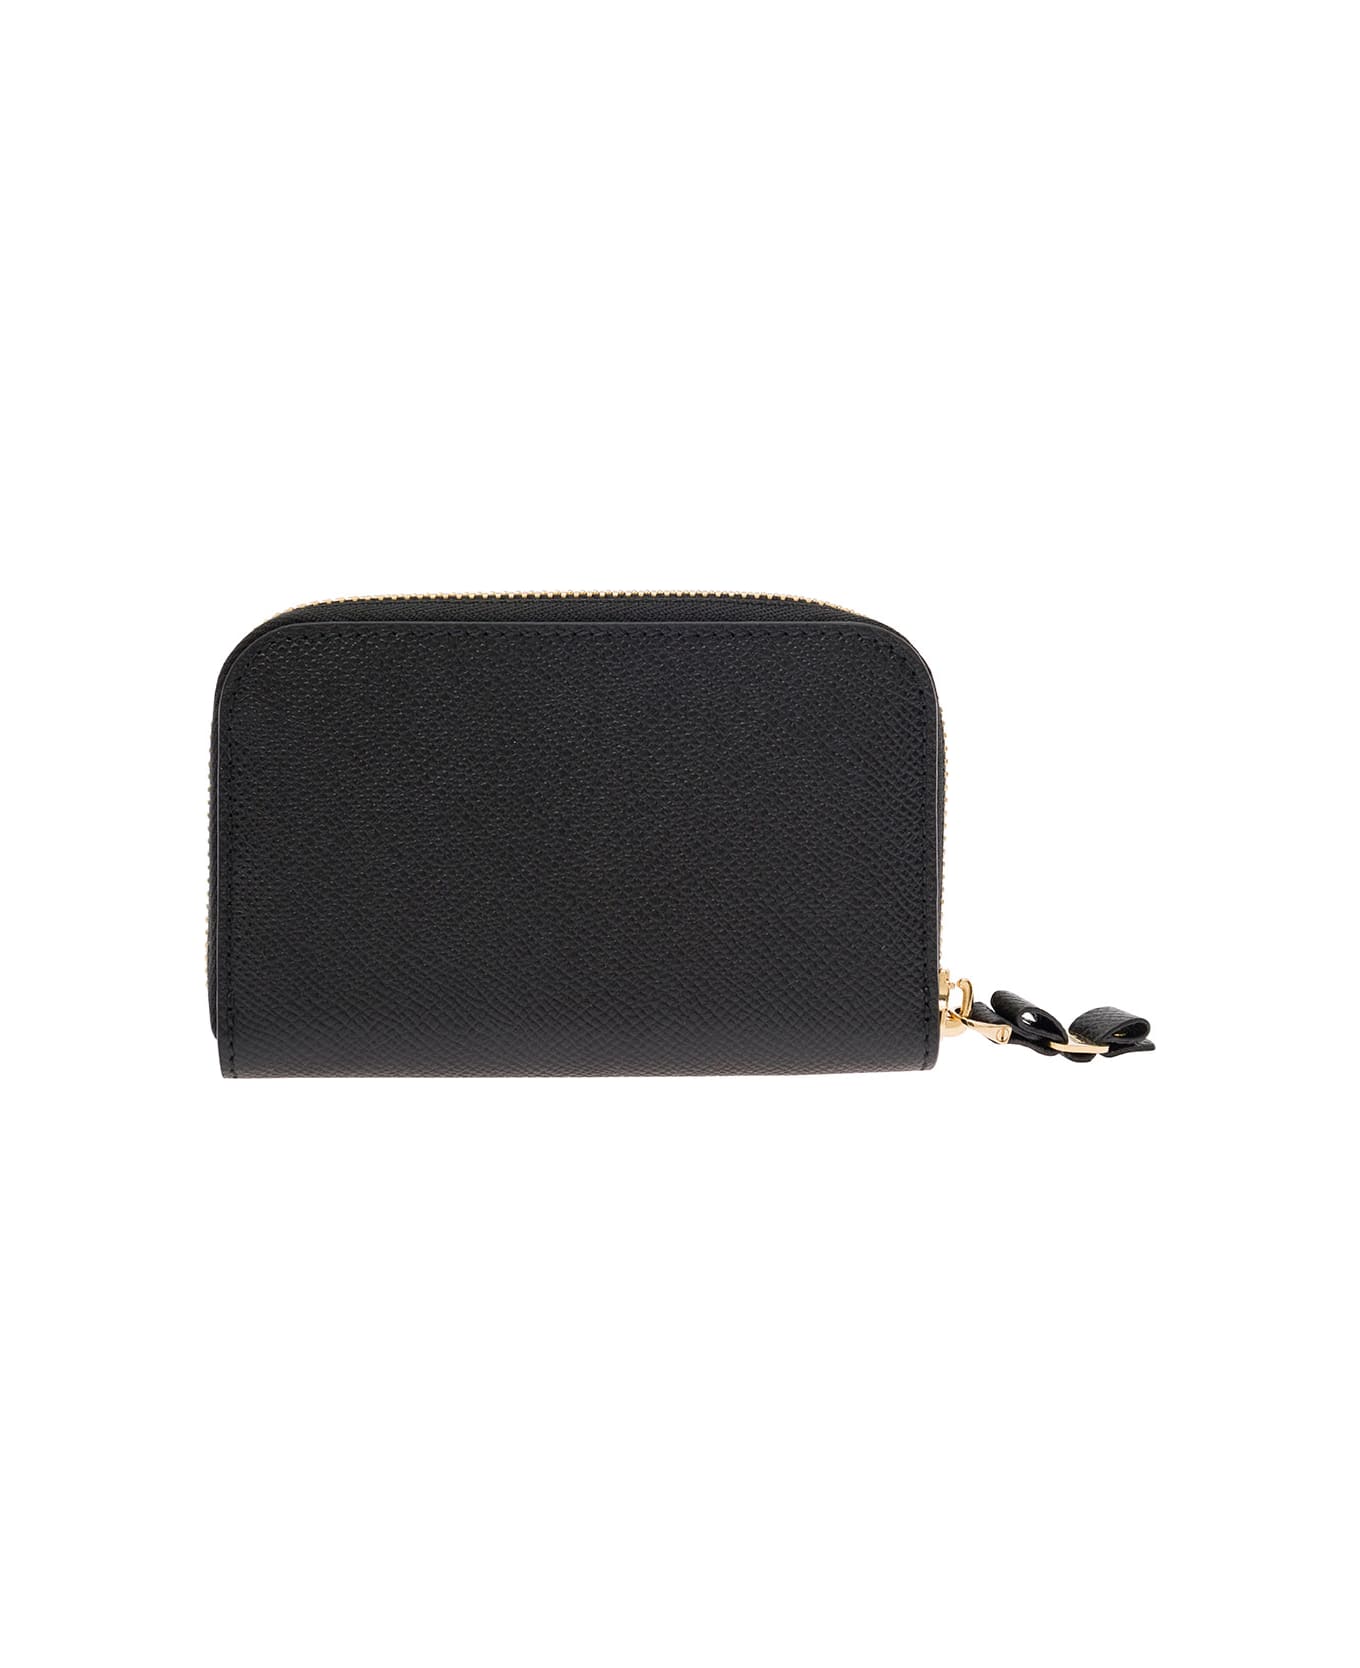 Ferragamo Black Leather Wallet - NERO 財布